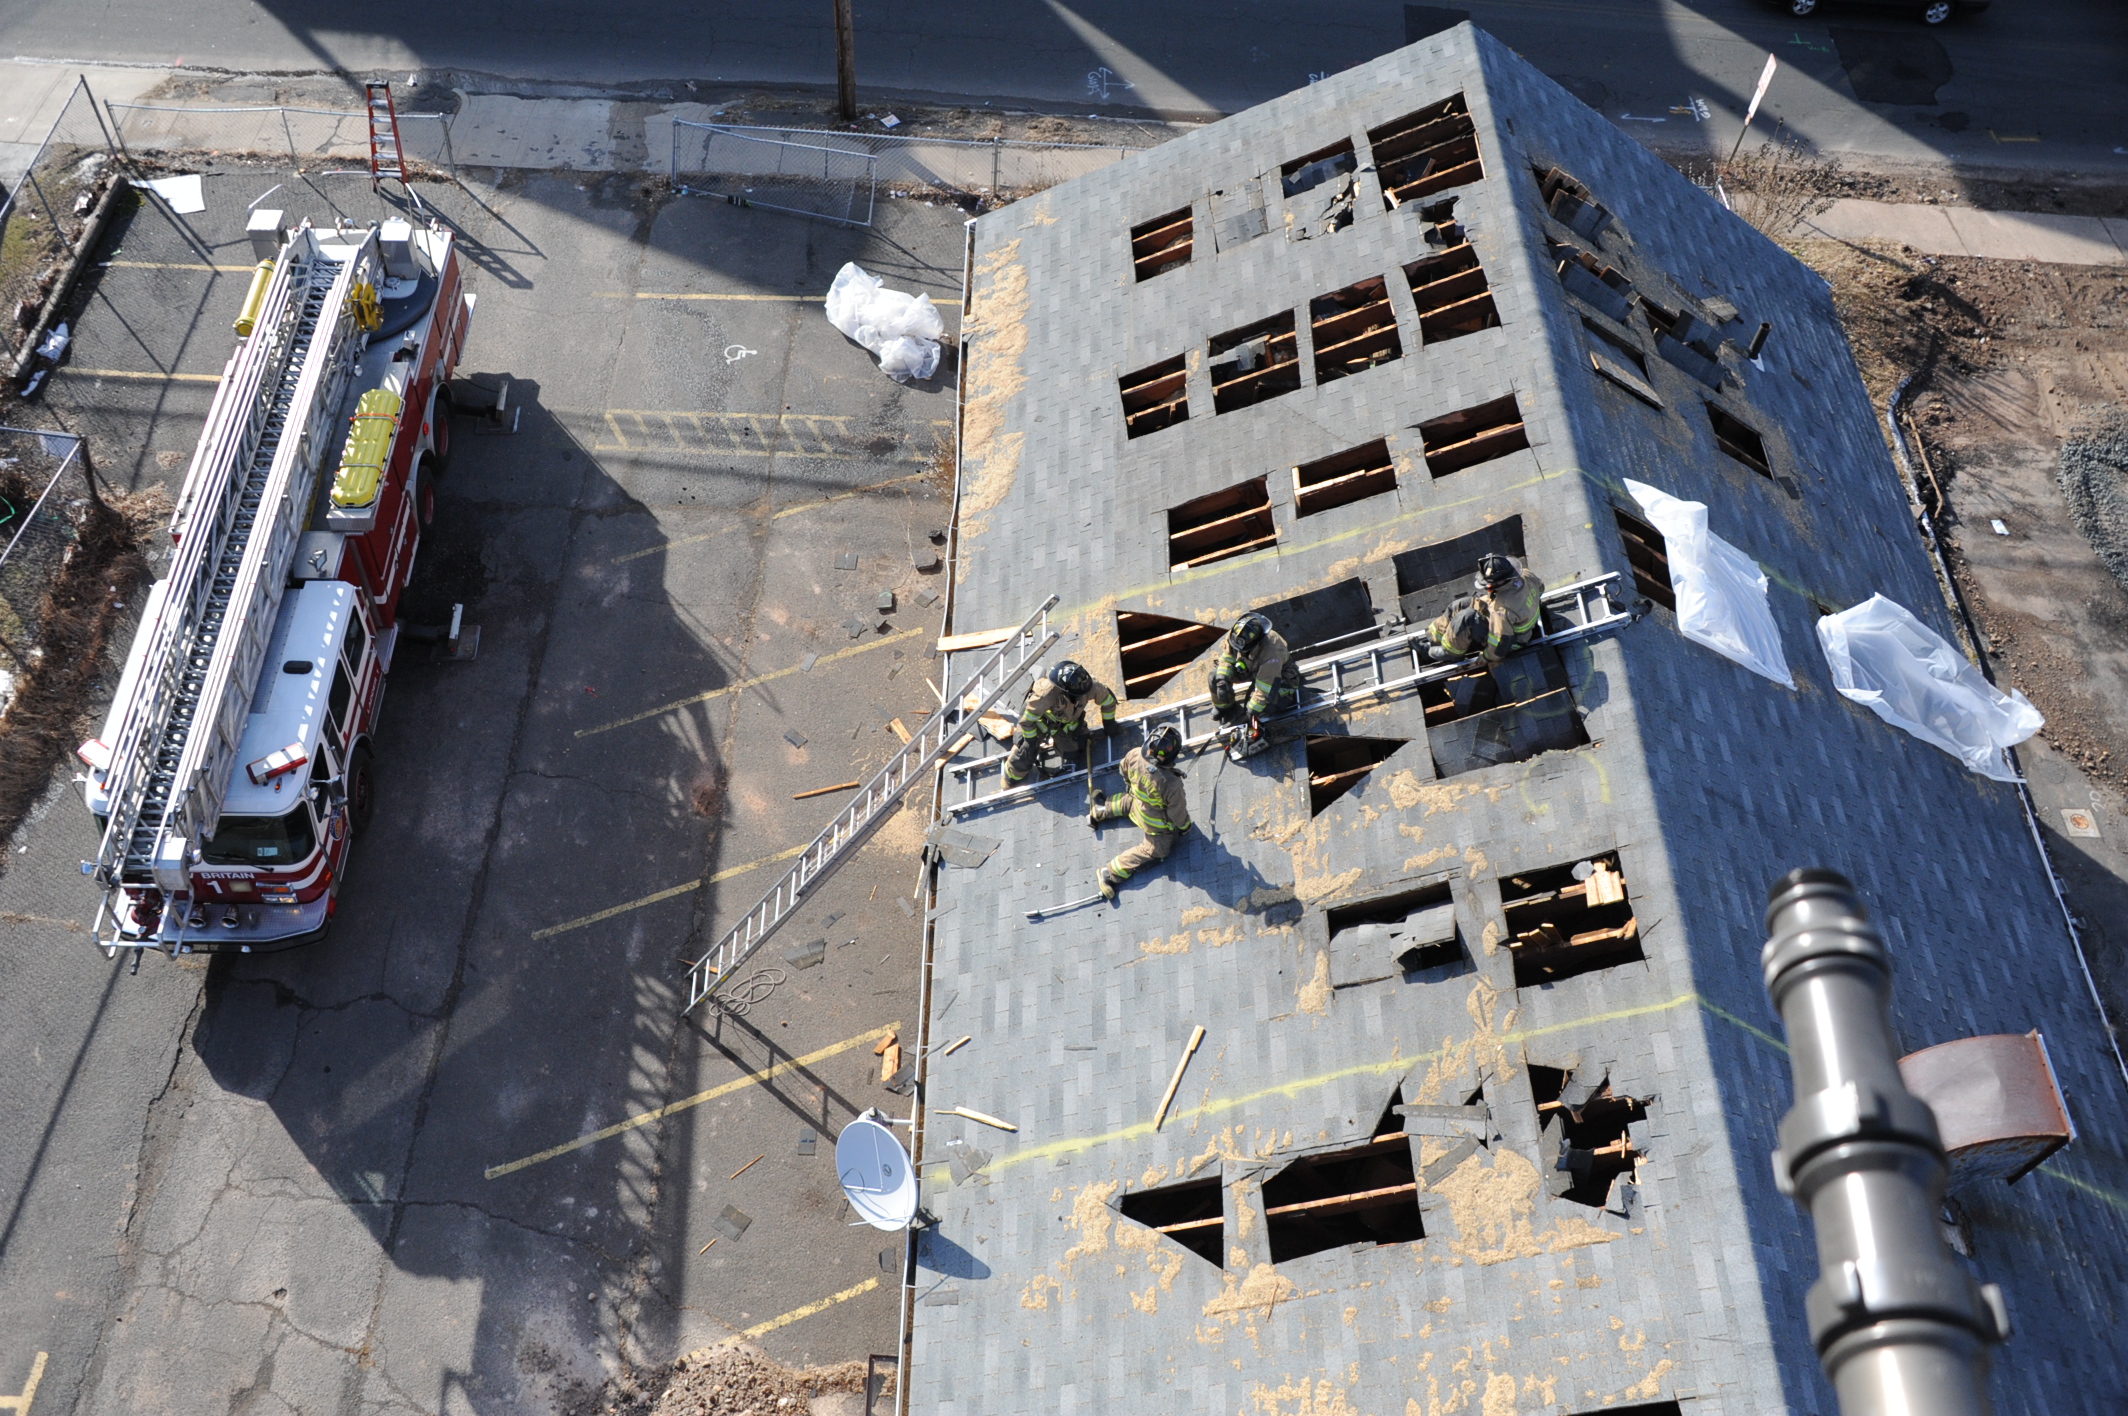 Fireman's View from a 100ft Ladder Truck